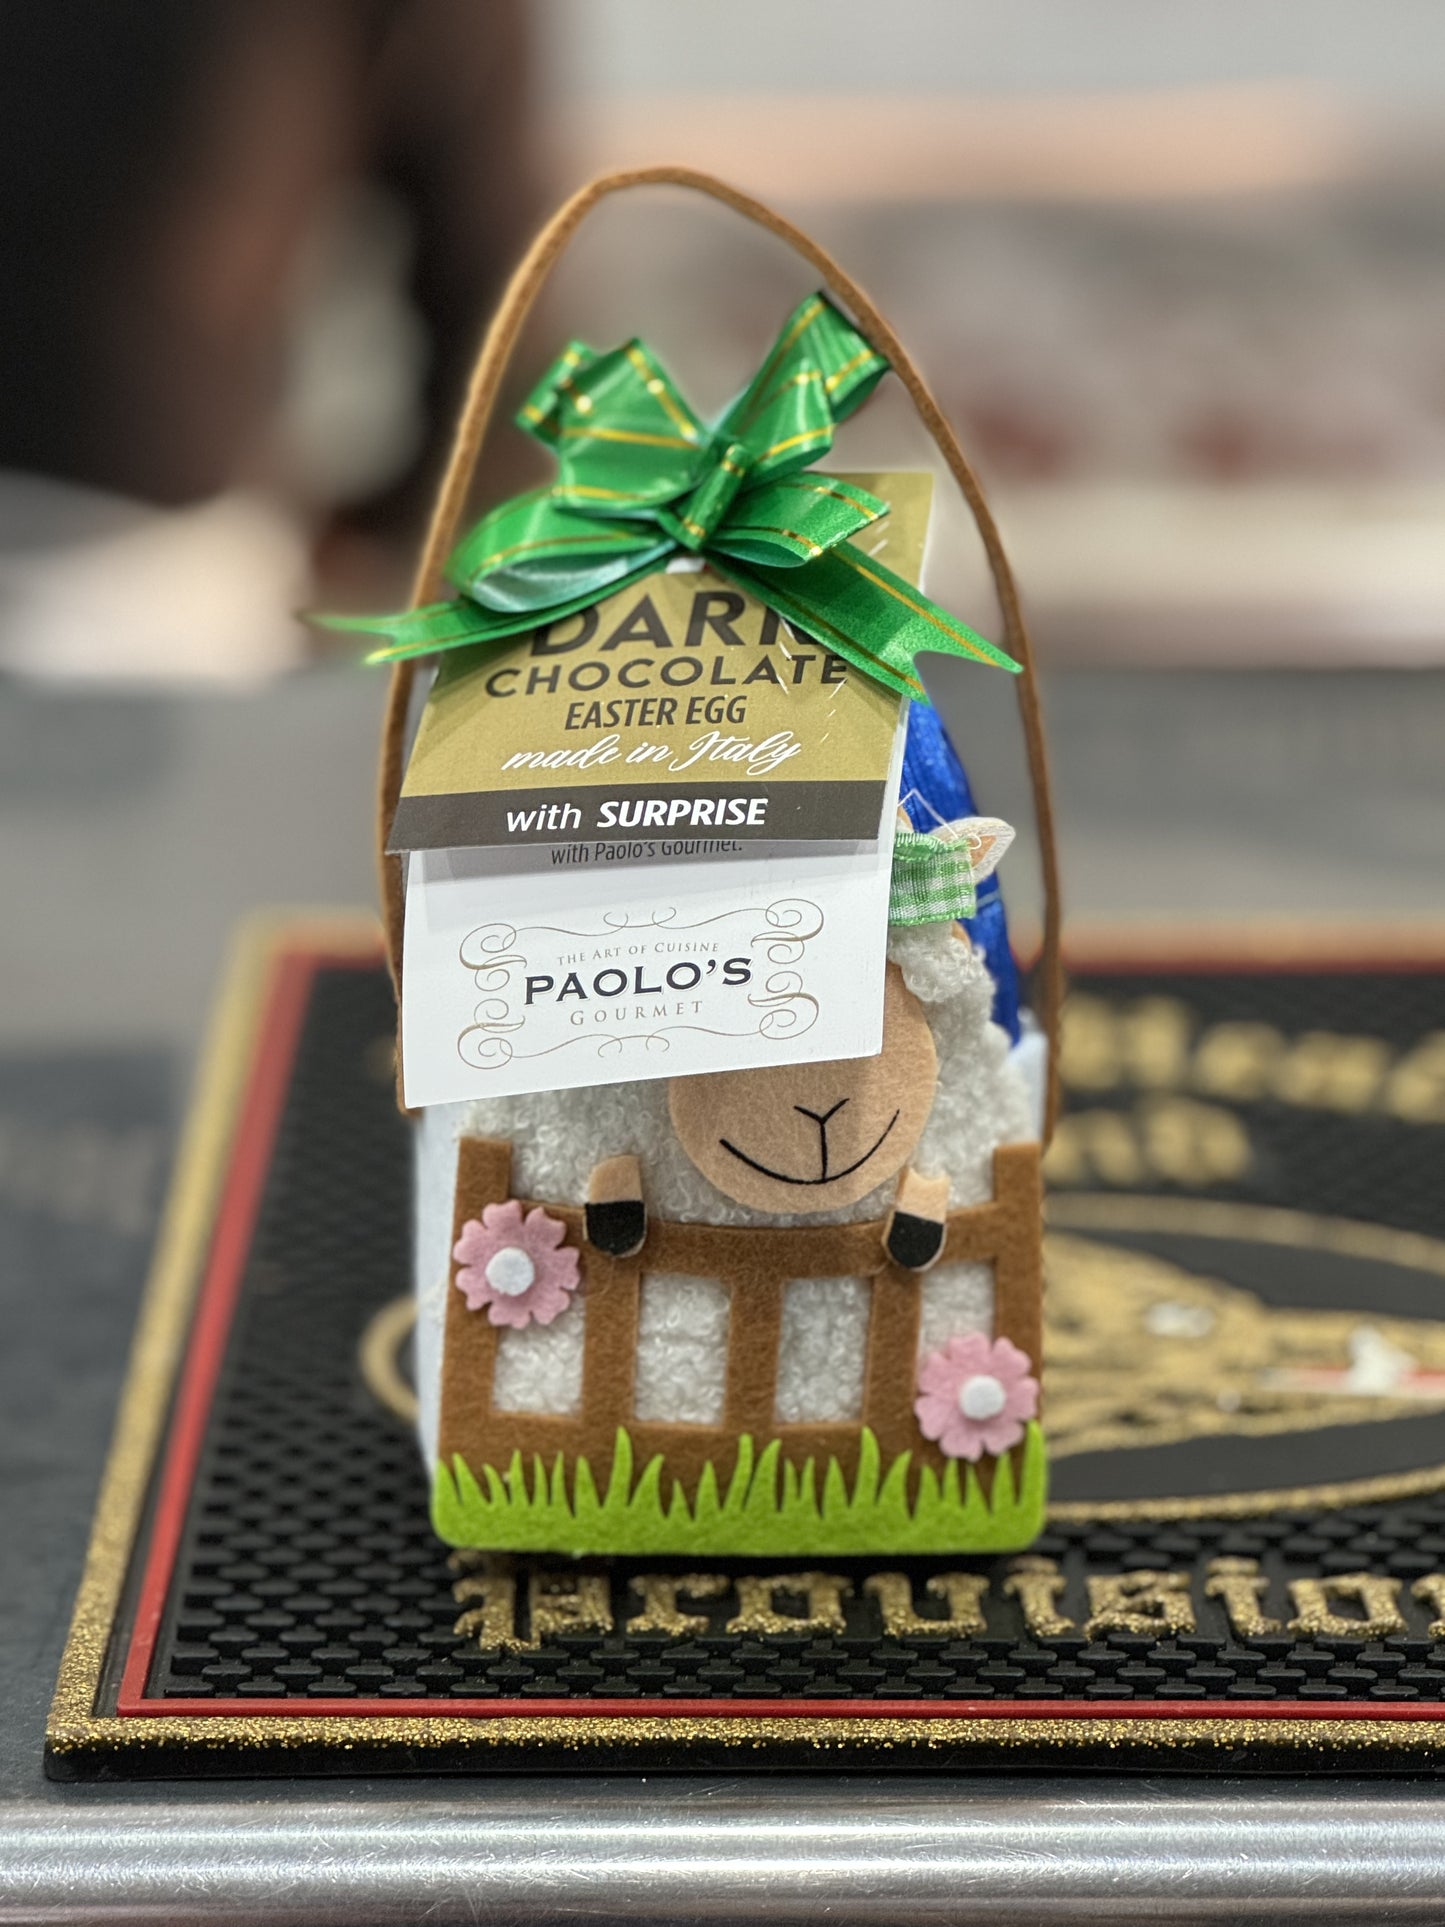 Paolo’s Borsetta Chocolate Egg 150 gram